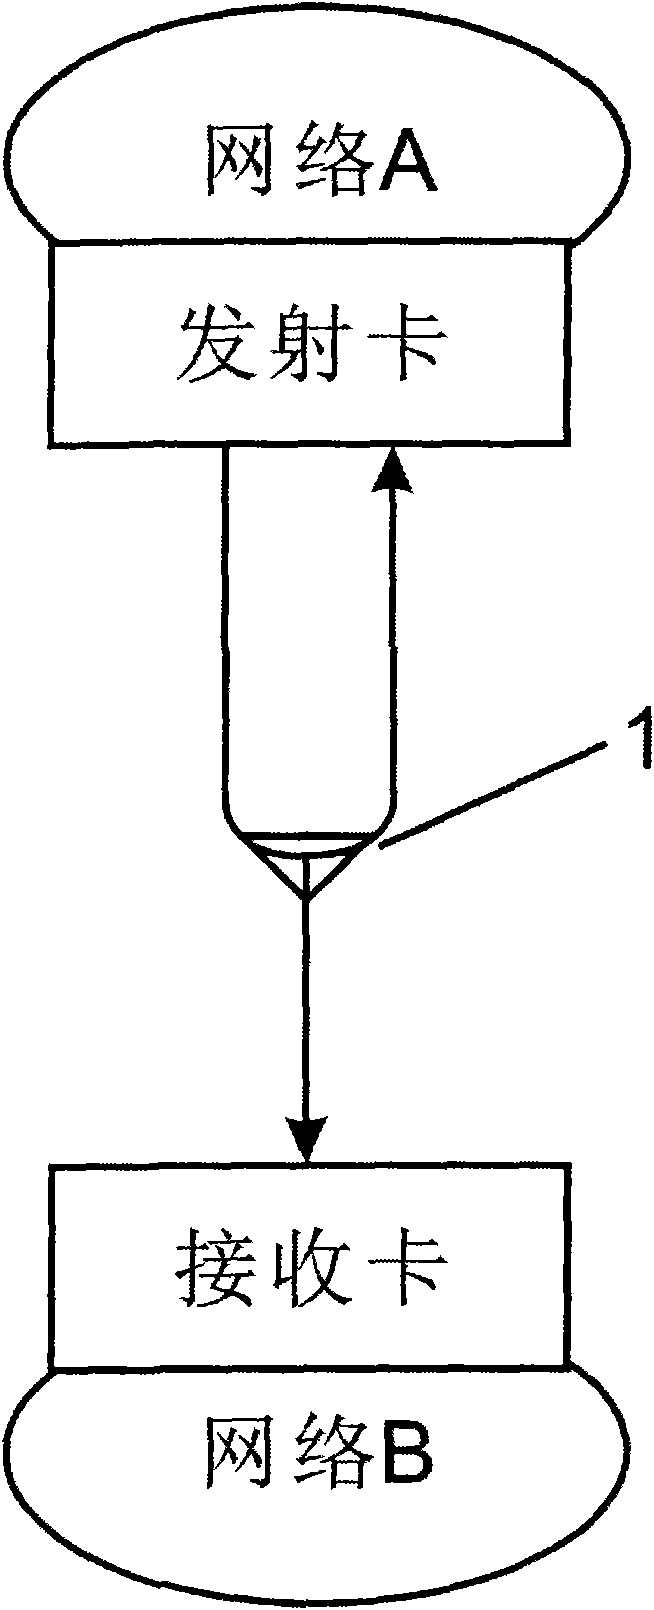 Optical one-way transmission path